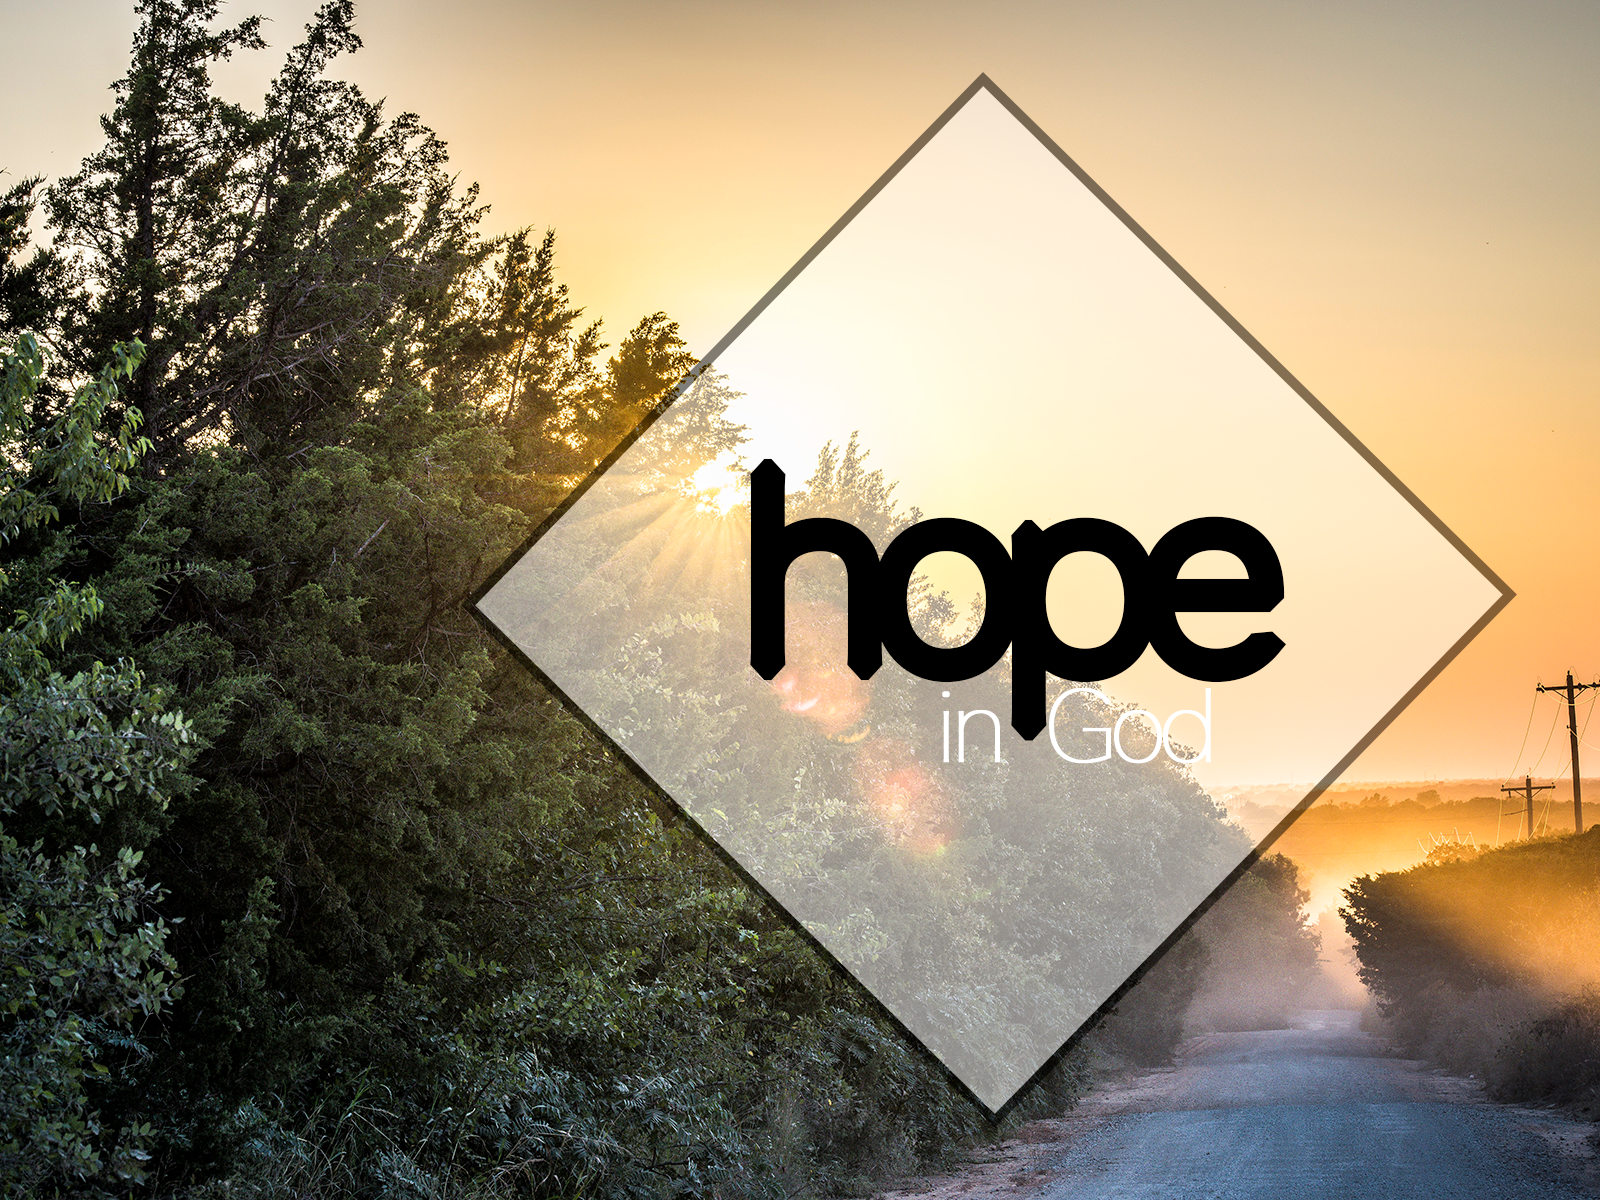 New Sunday Series – “Hope in God”